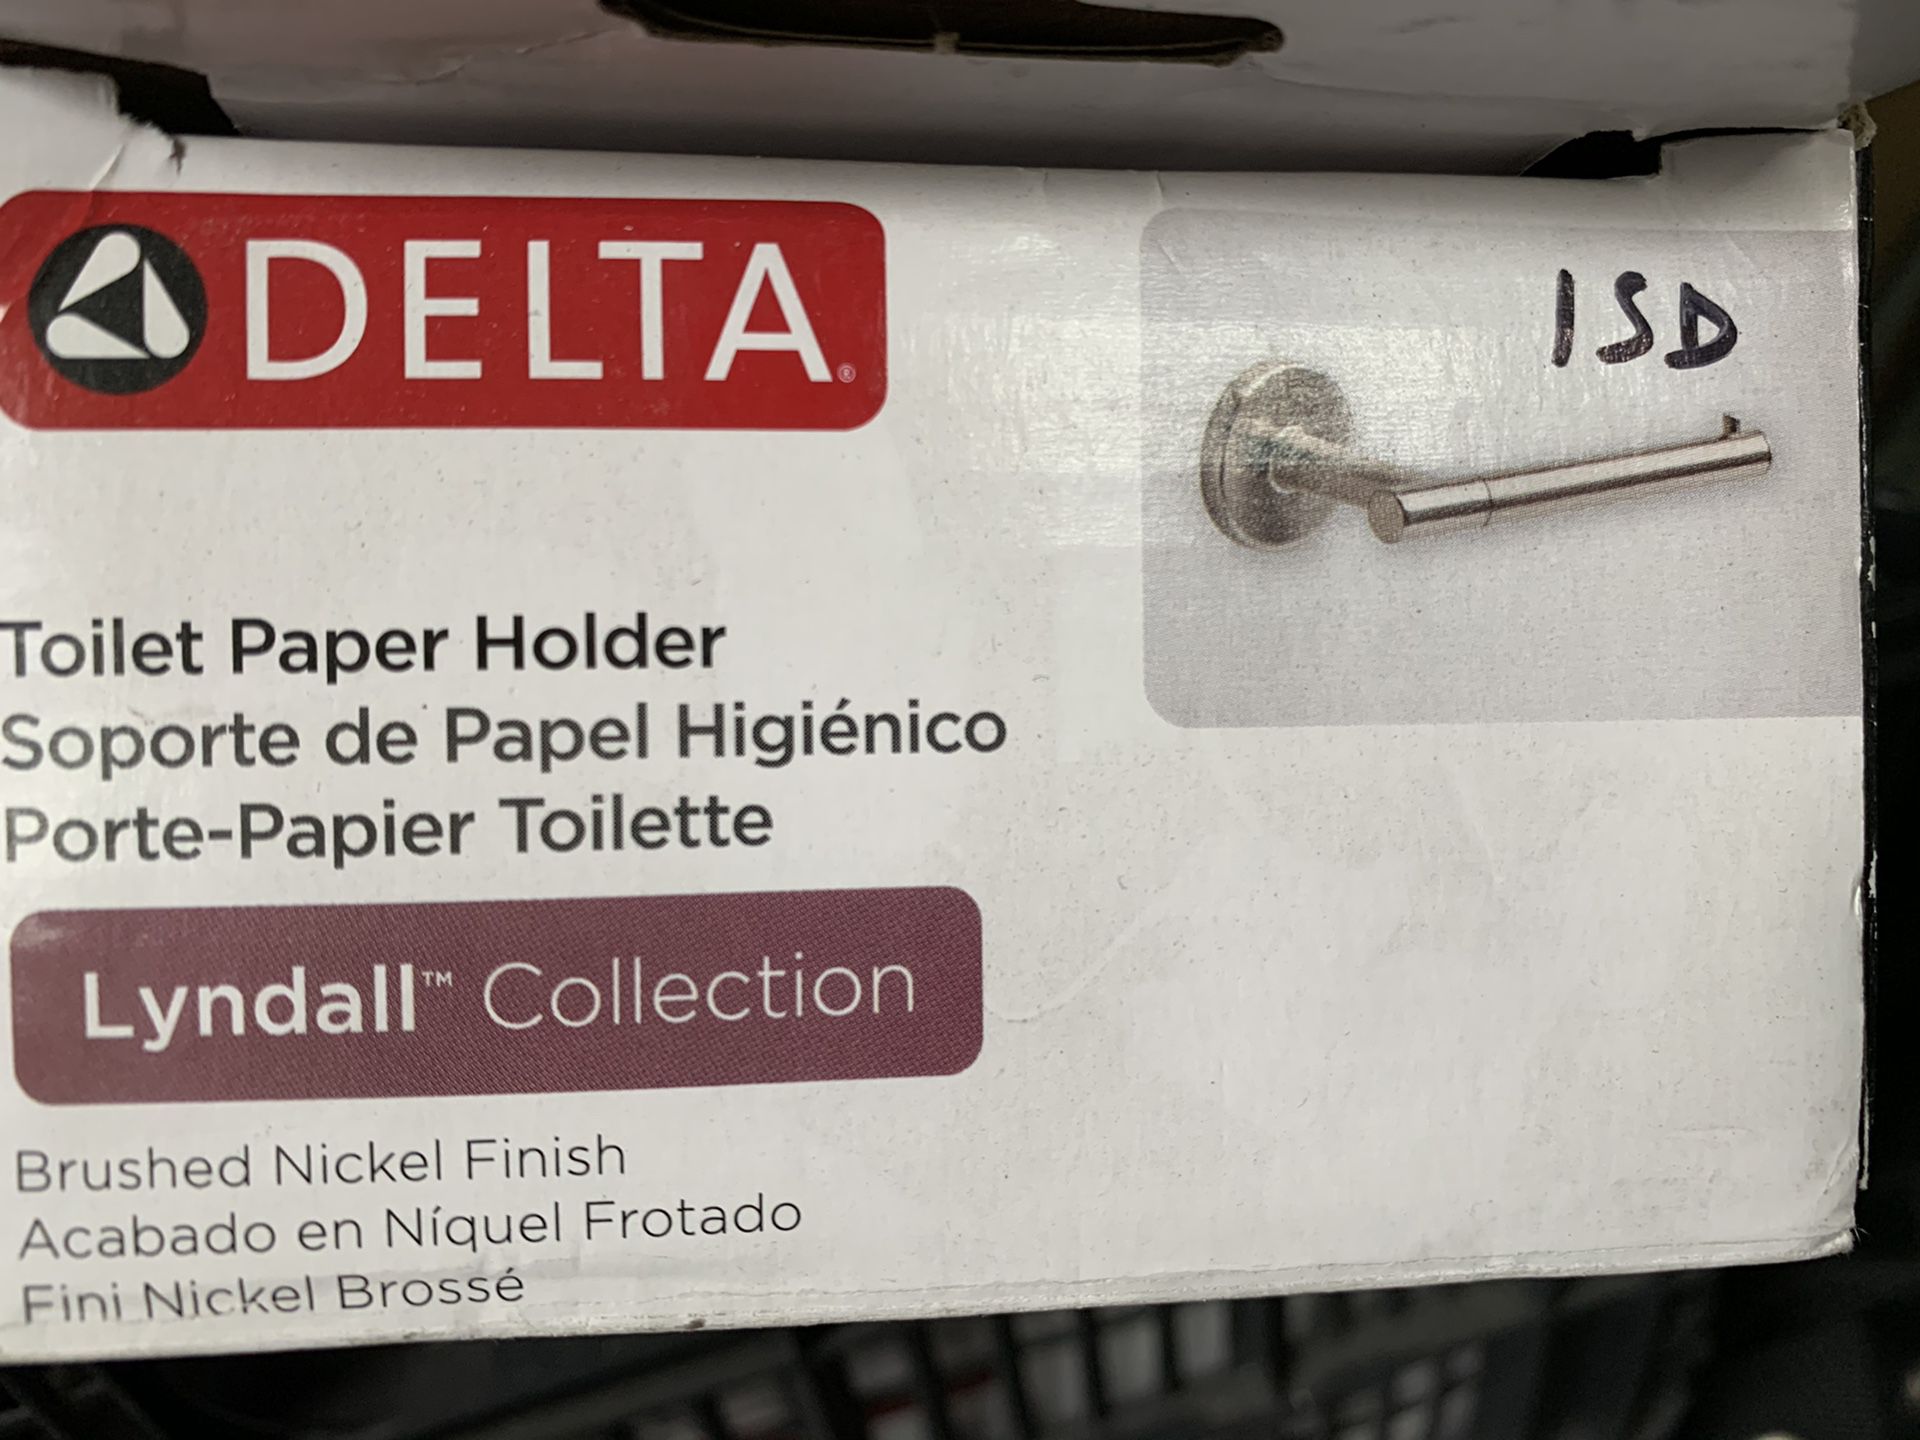 Delta lyndall toilet paper holder new